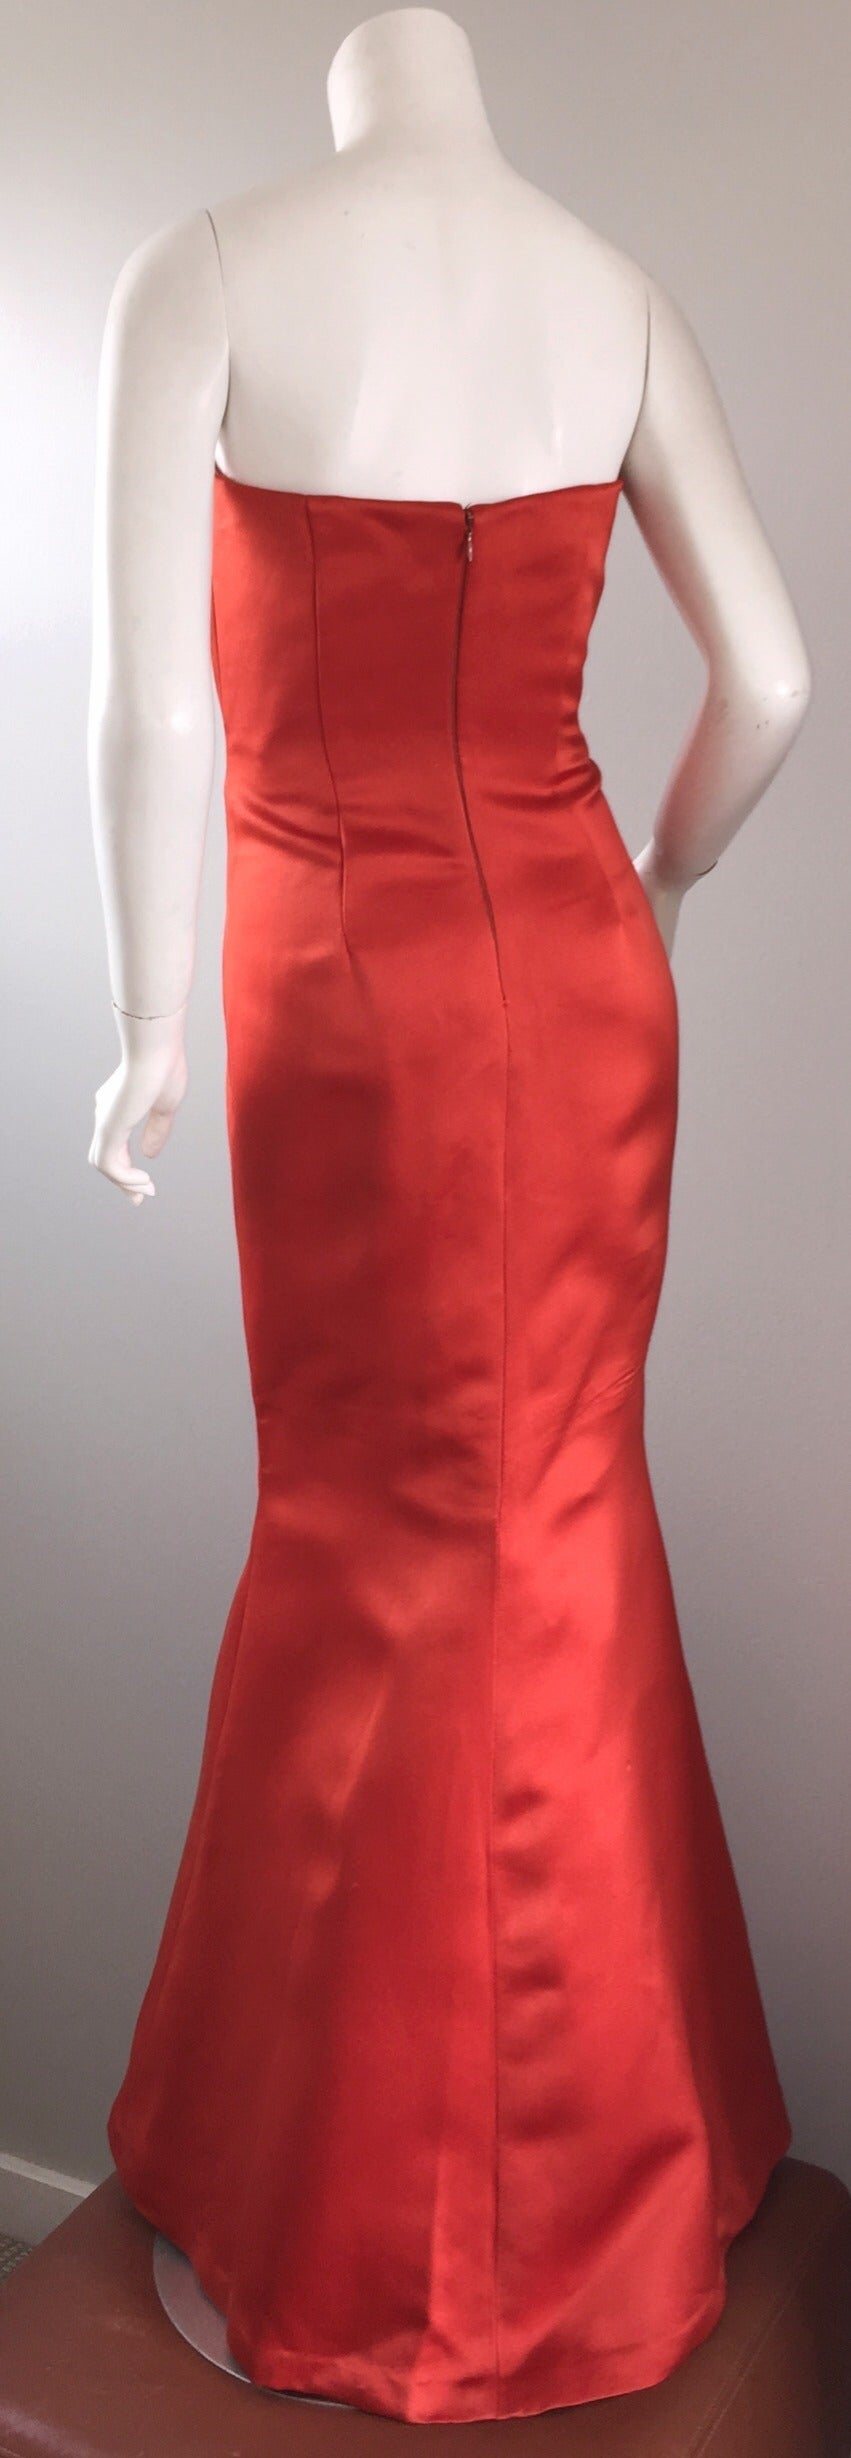 red strapless silk dress